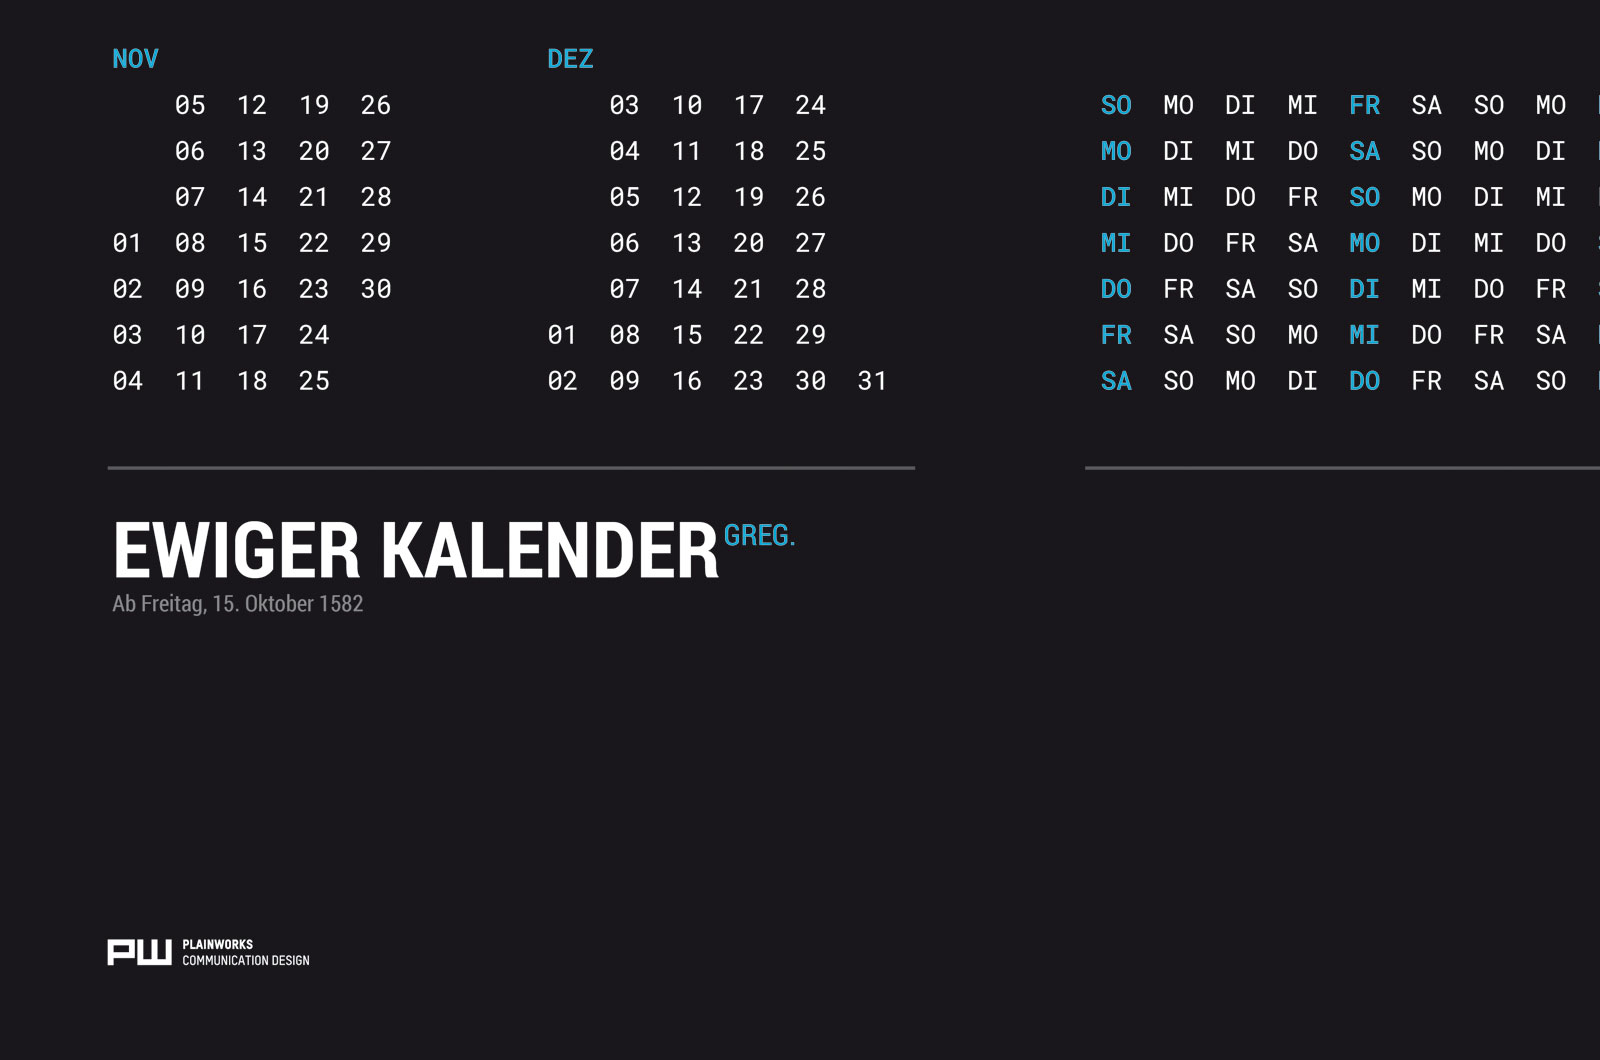 Alexander Glante - Works - Perpetual Calendar - 05